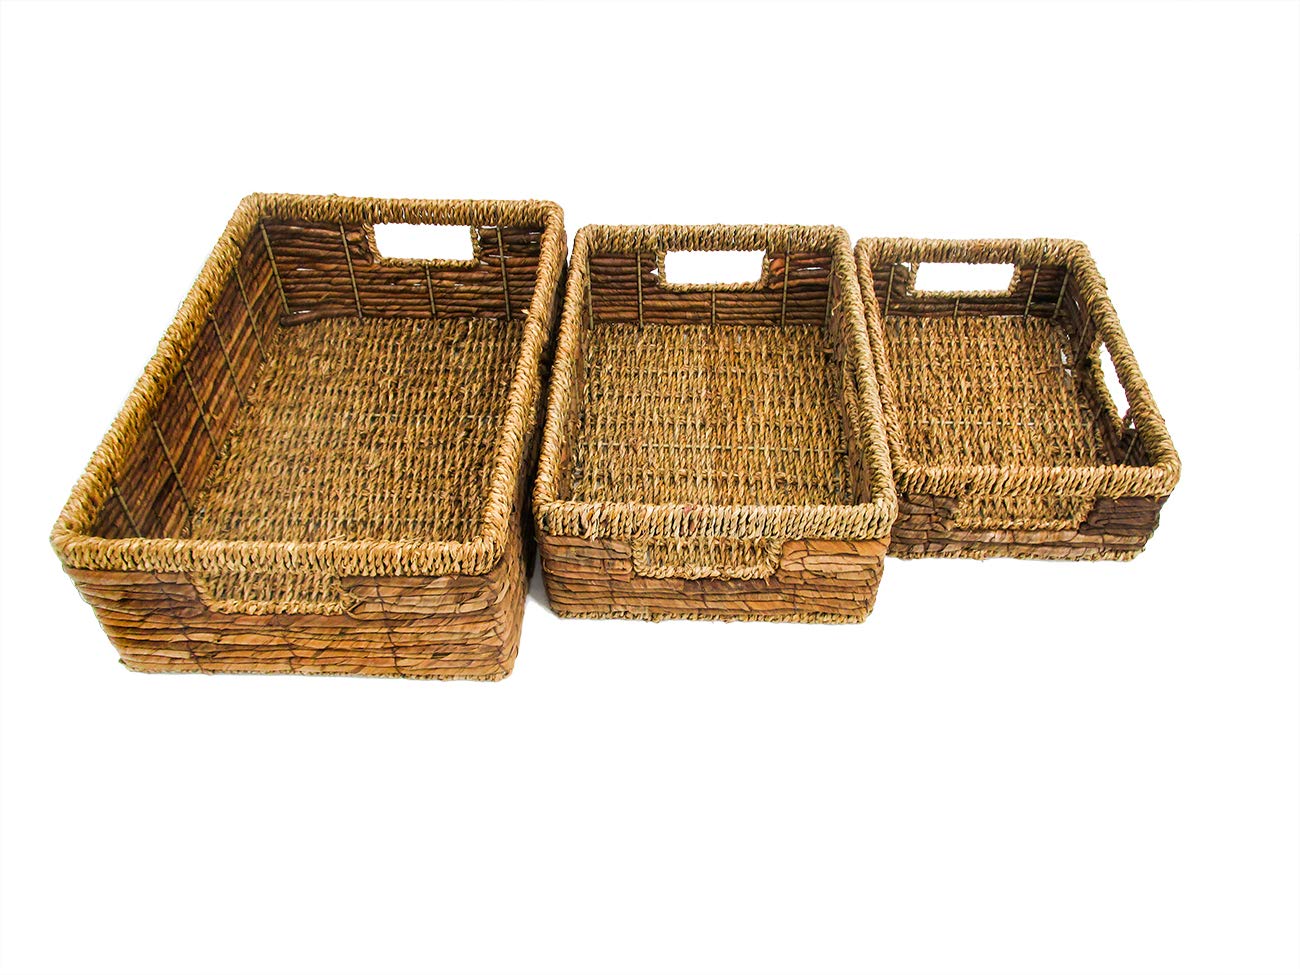 Trademark Innovations Banana Leaf Nesting Basket Organizer Set with Handles (Set of 3)